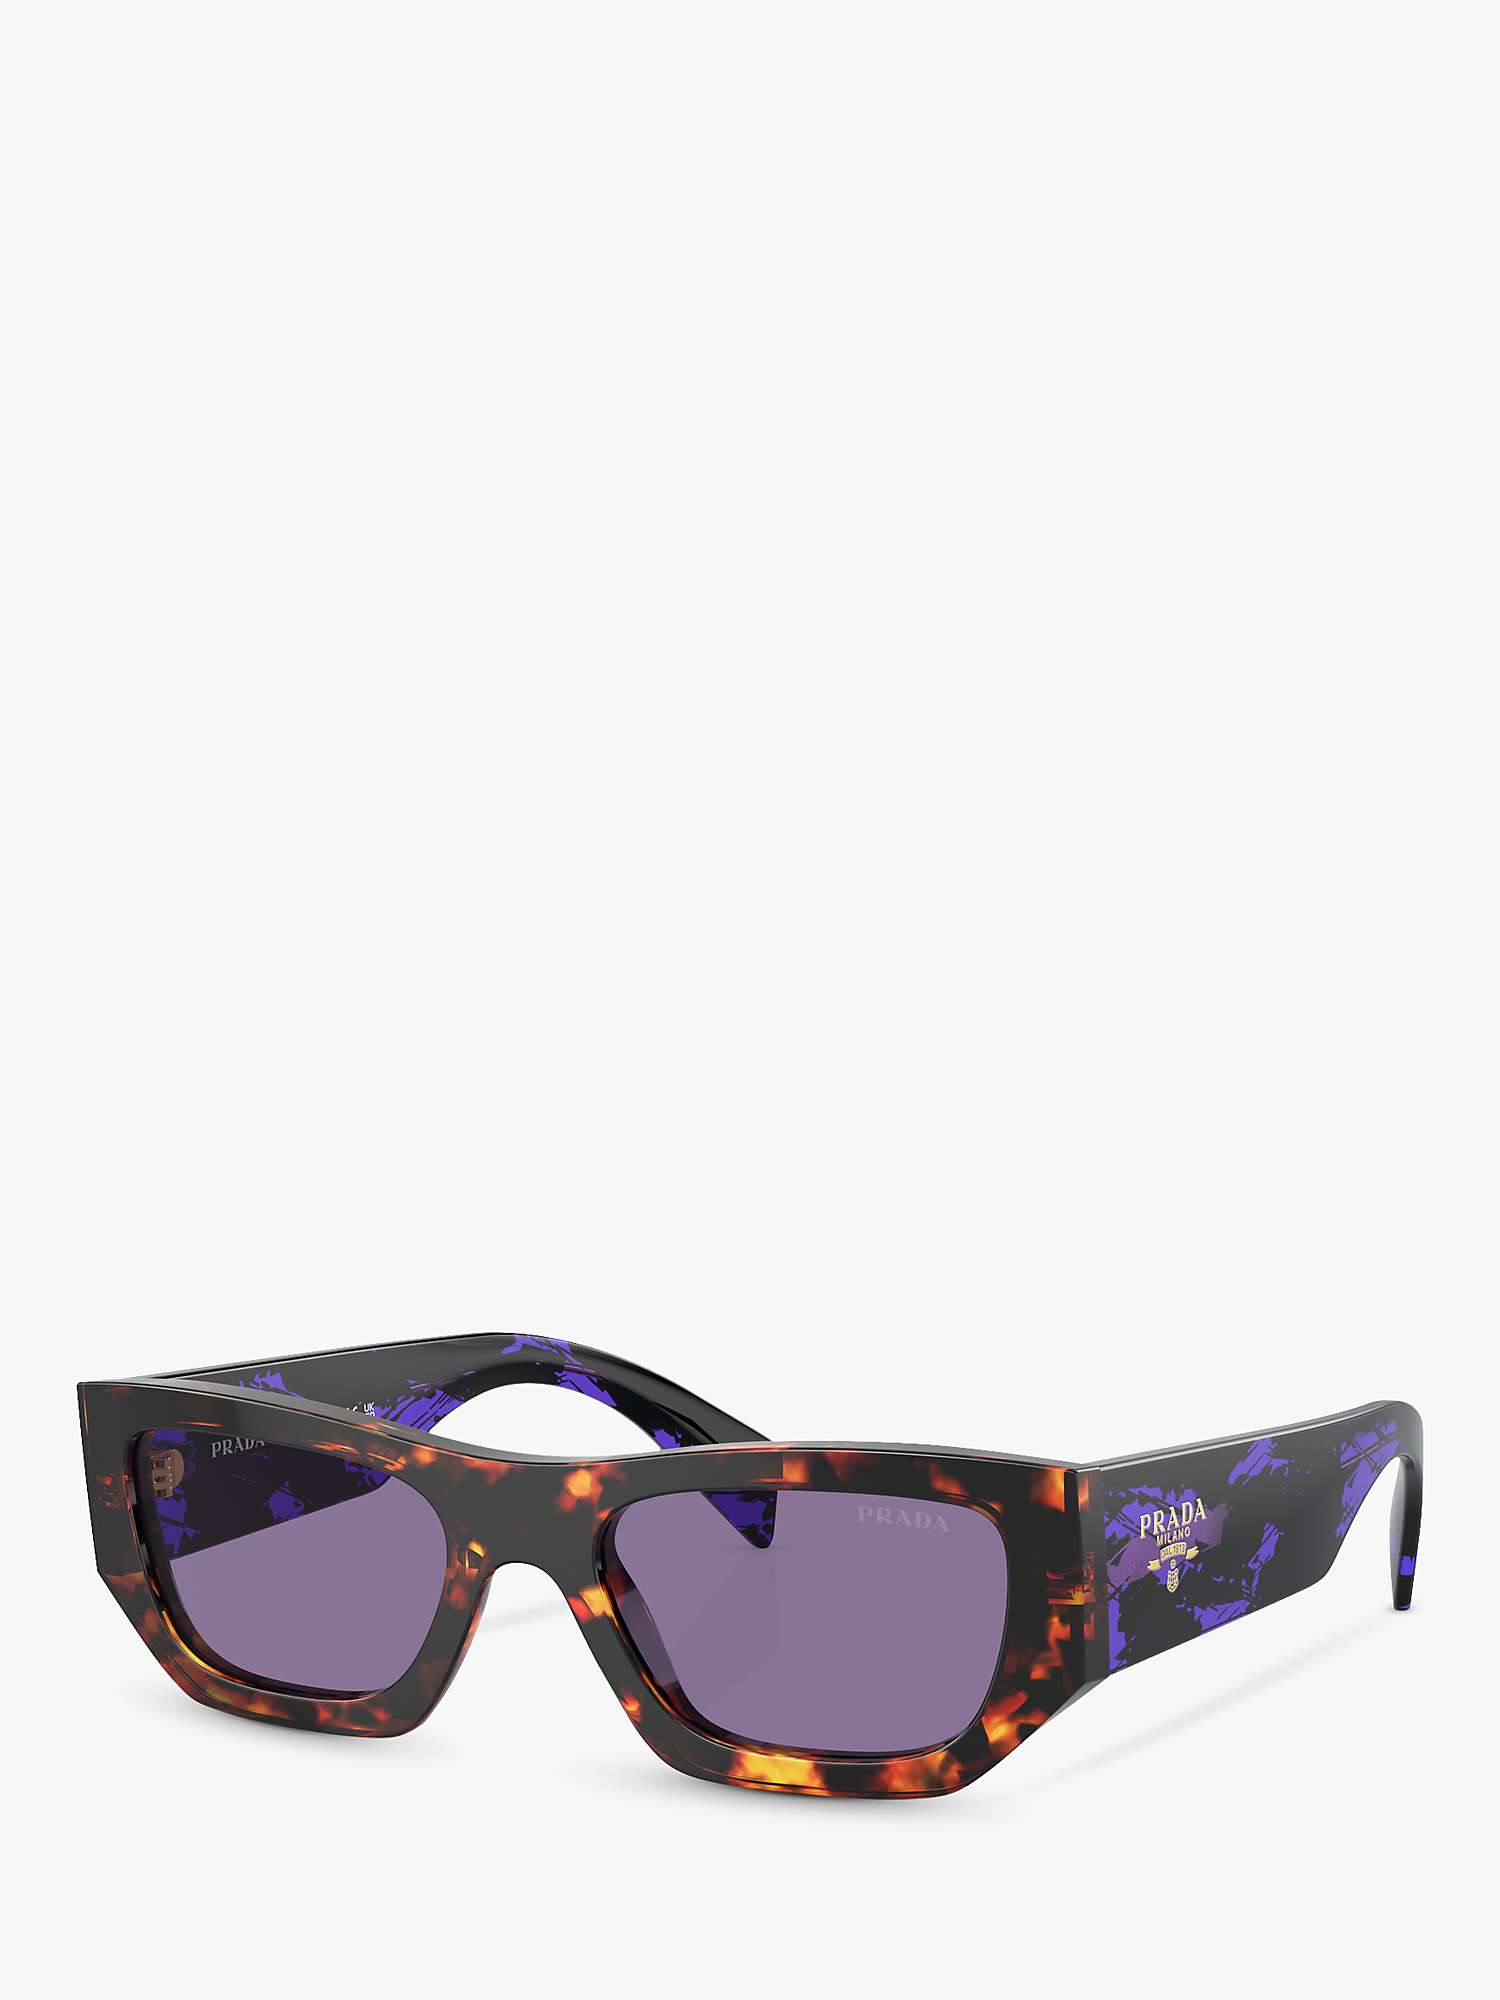 Buy Prada PR A01S Women's Rectangular Sunglasses, Havana/Purple Online at johnlewis.com